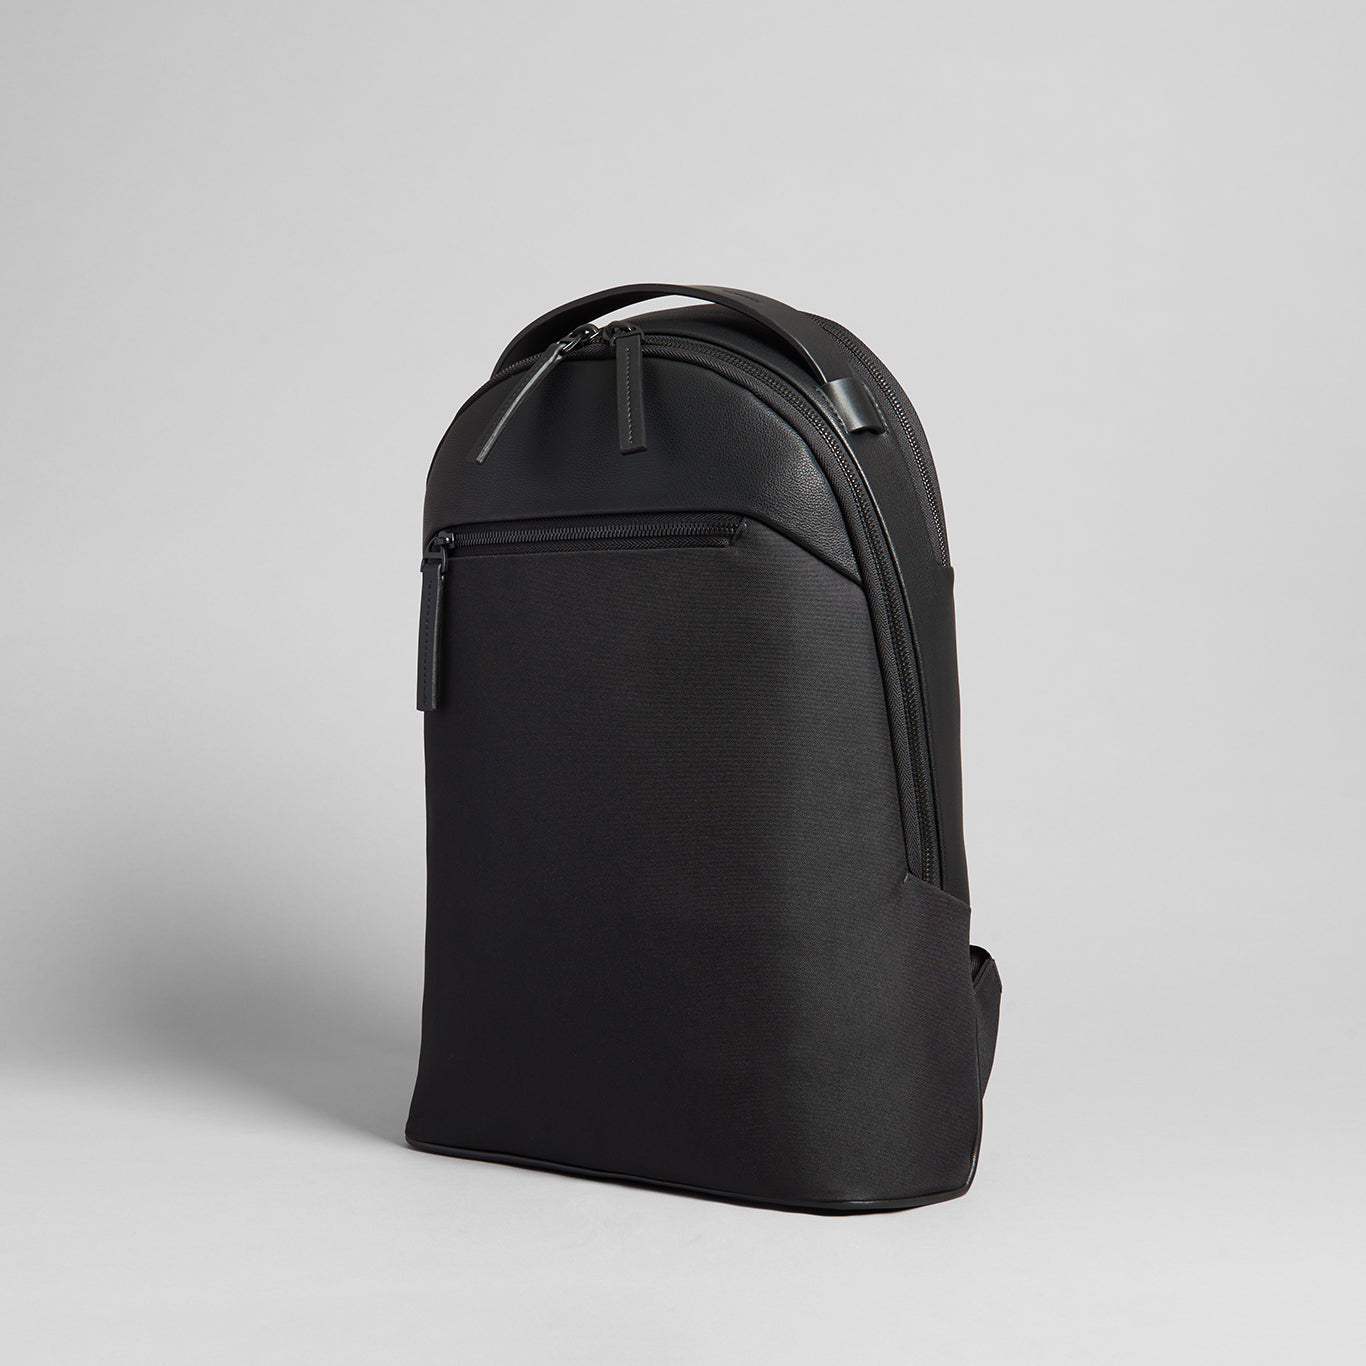 Luxe Explorer Backpack